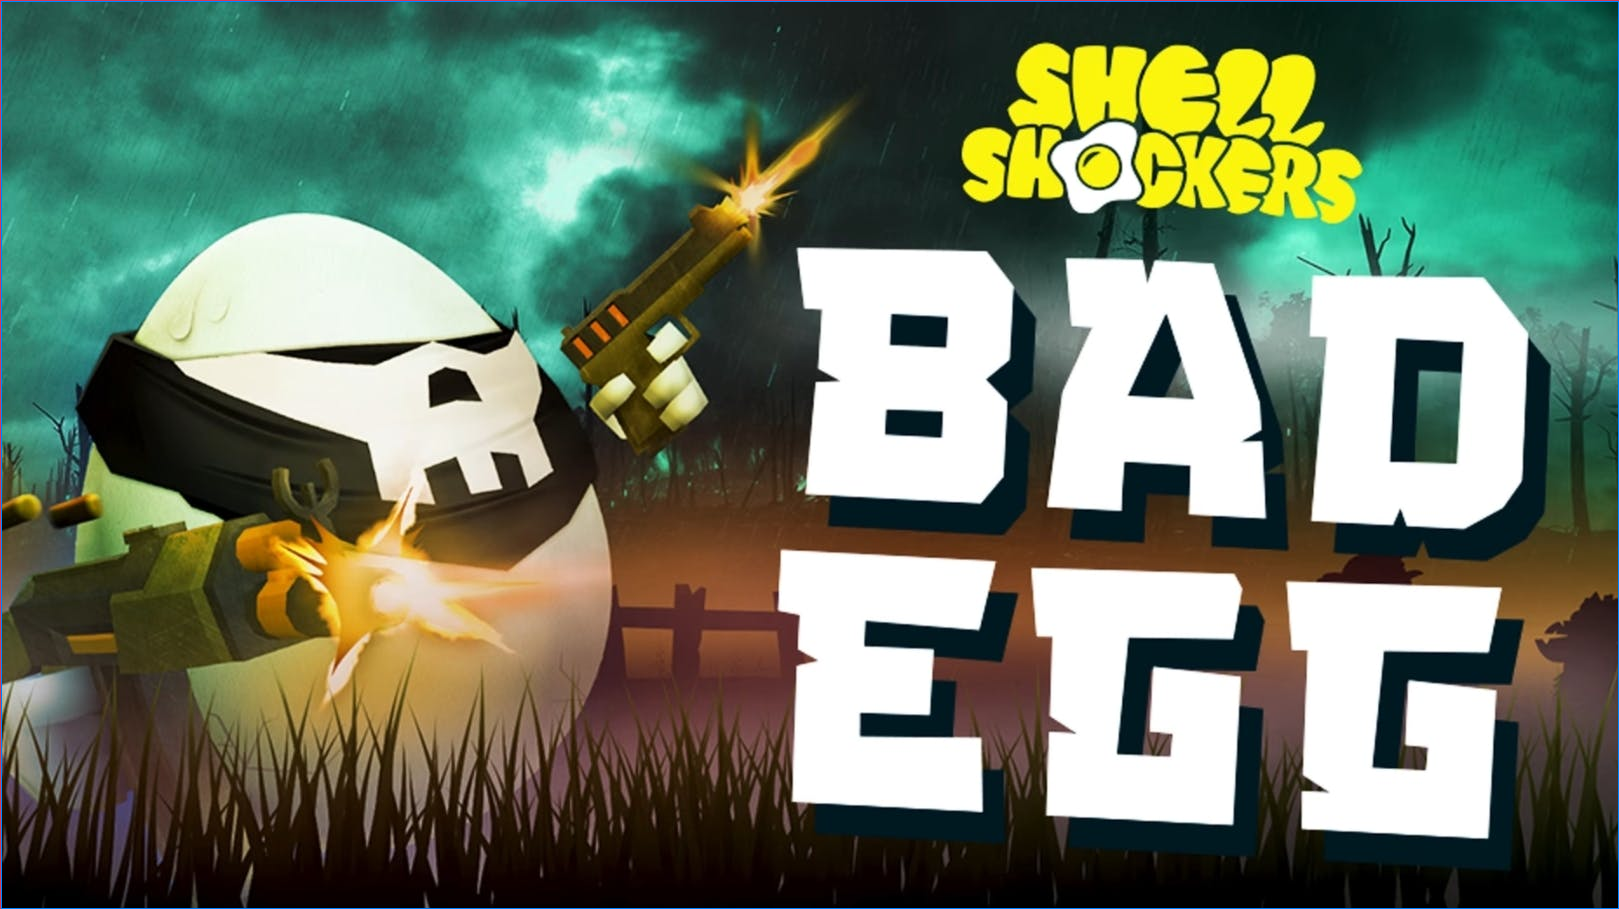 Shell Shockers Bad Egg - Unblocked Games